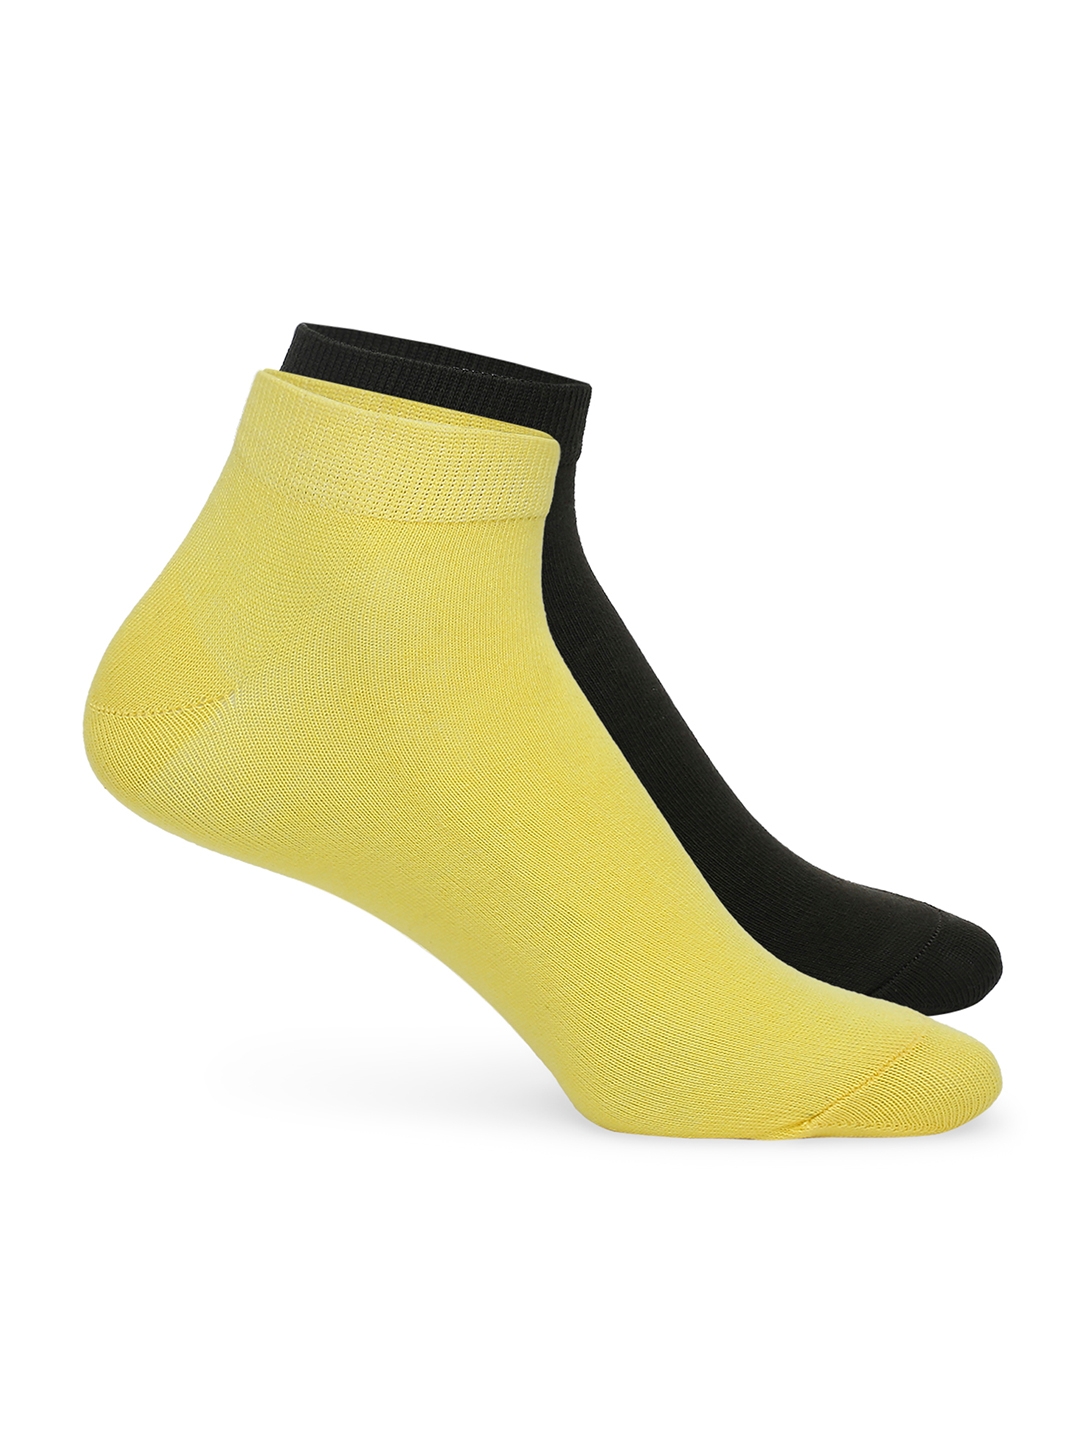 spykar | Underjeans By Spykar Men Olive & Yellow Cotton Blend Sneaker Socks - Pack Of 2